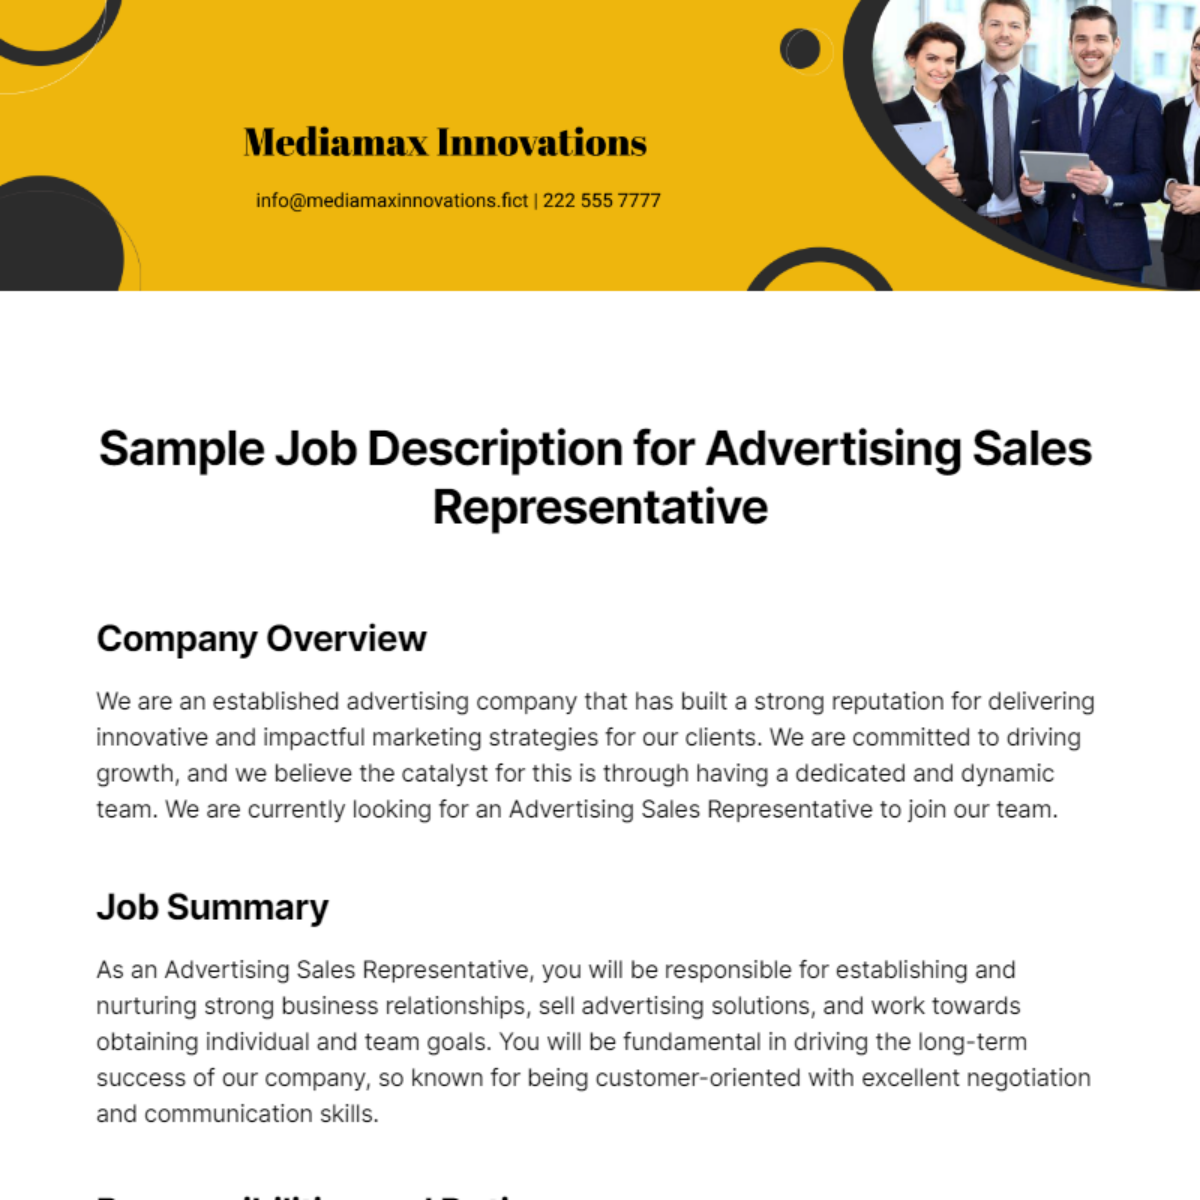 Sample Job Description for Advertising Sales Representative Template